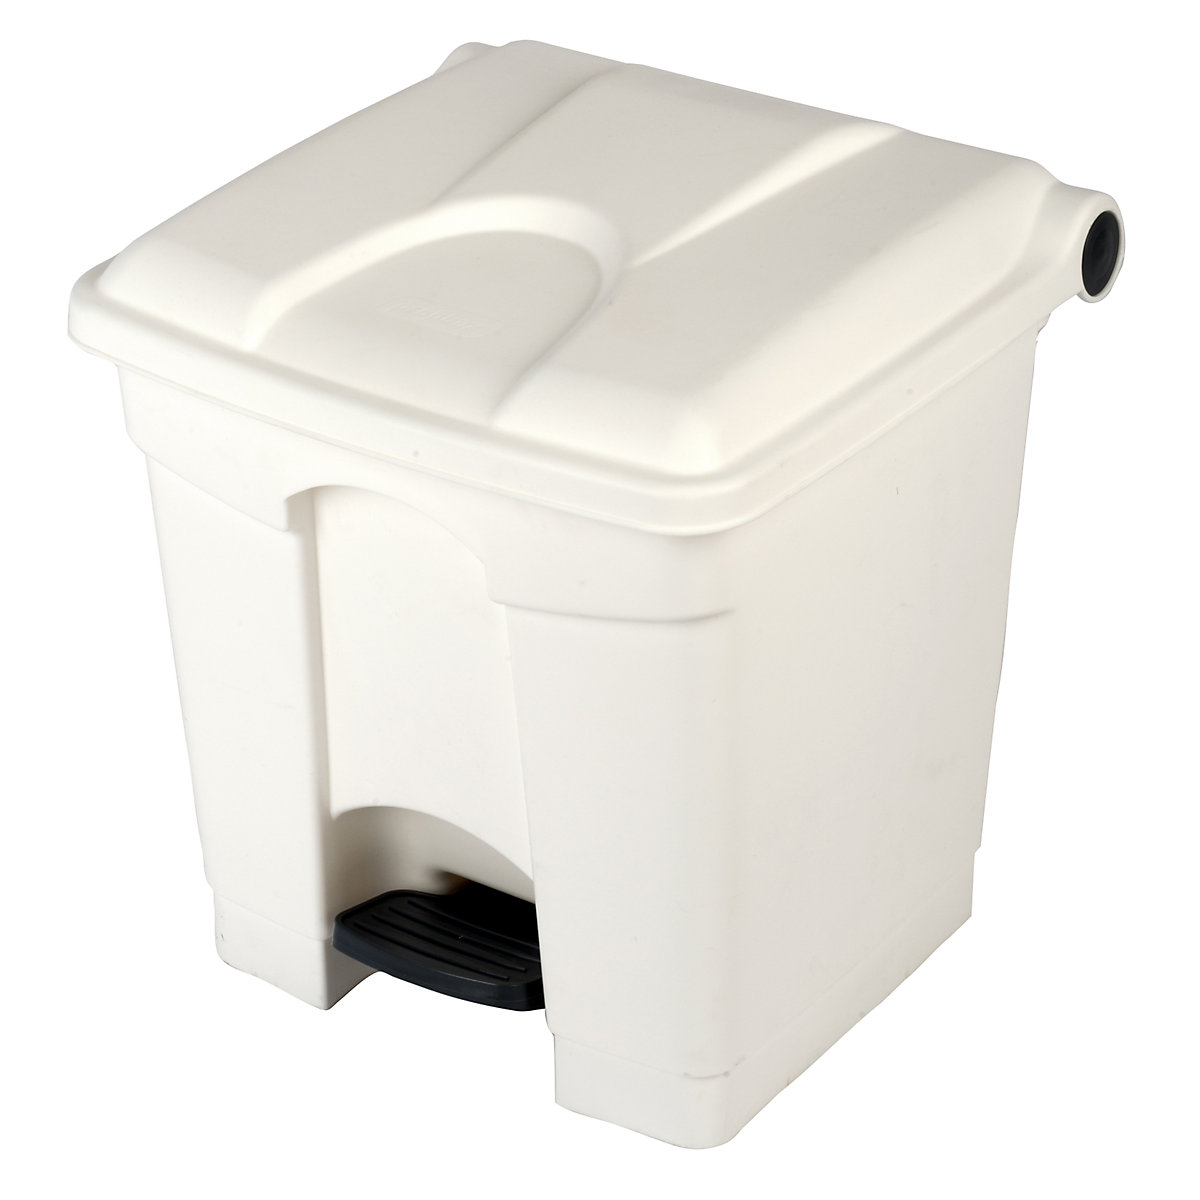 EUROKRAFTbasic – Pedal waste collector, capacity 30 l, WxHxD 410 x 435 x 400 mm, white